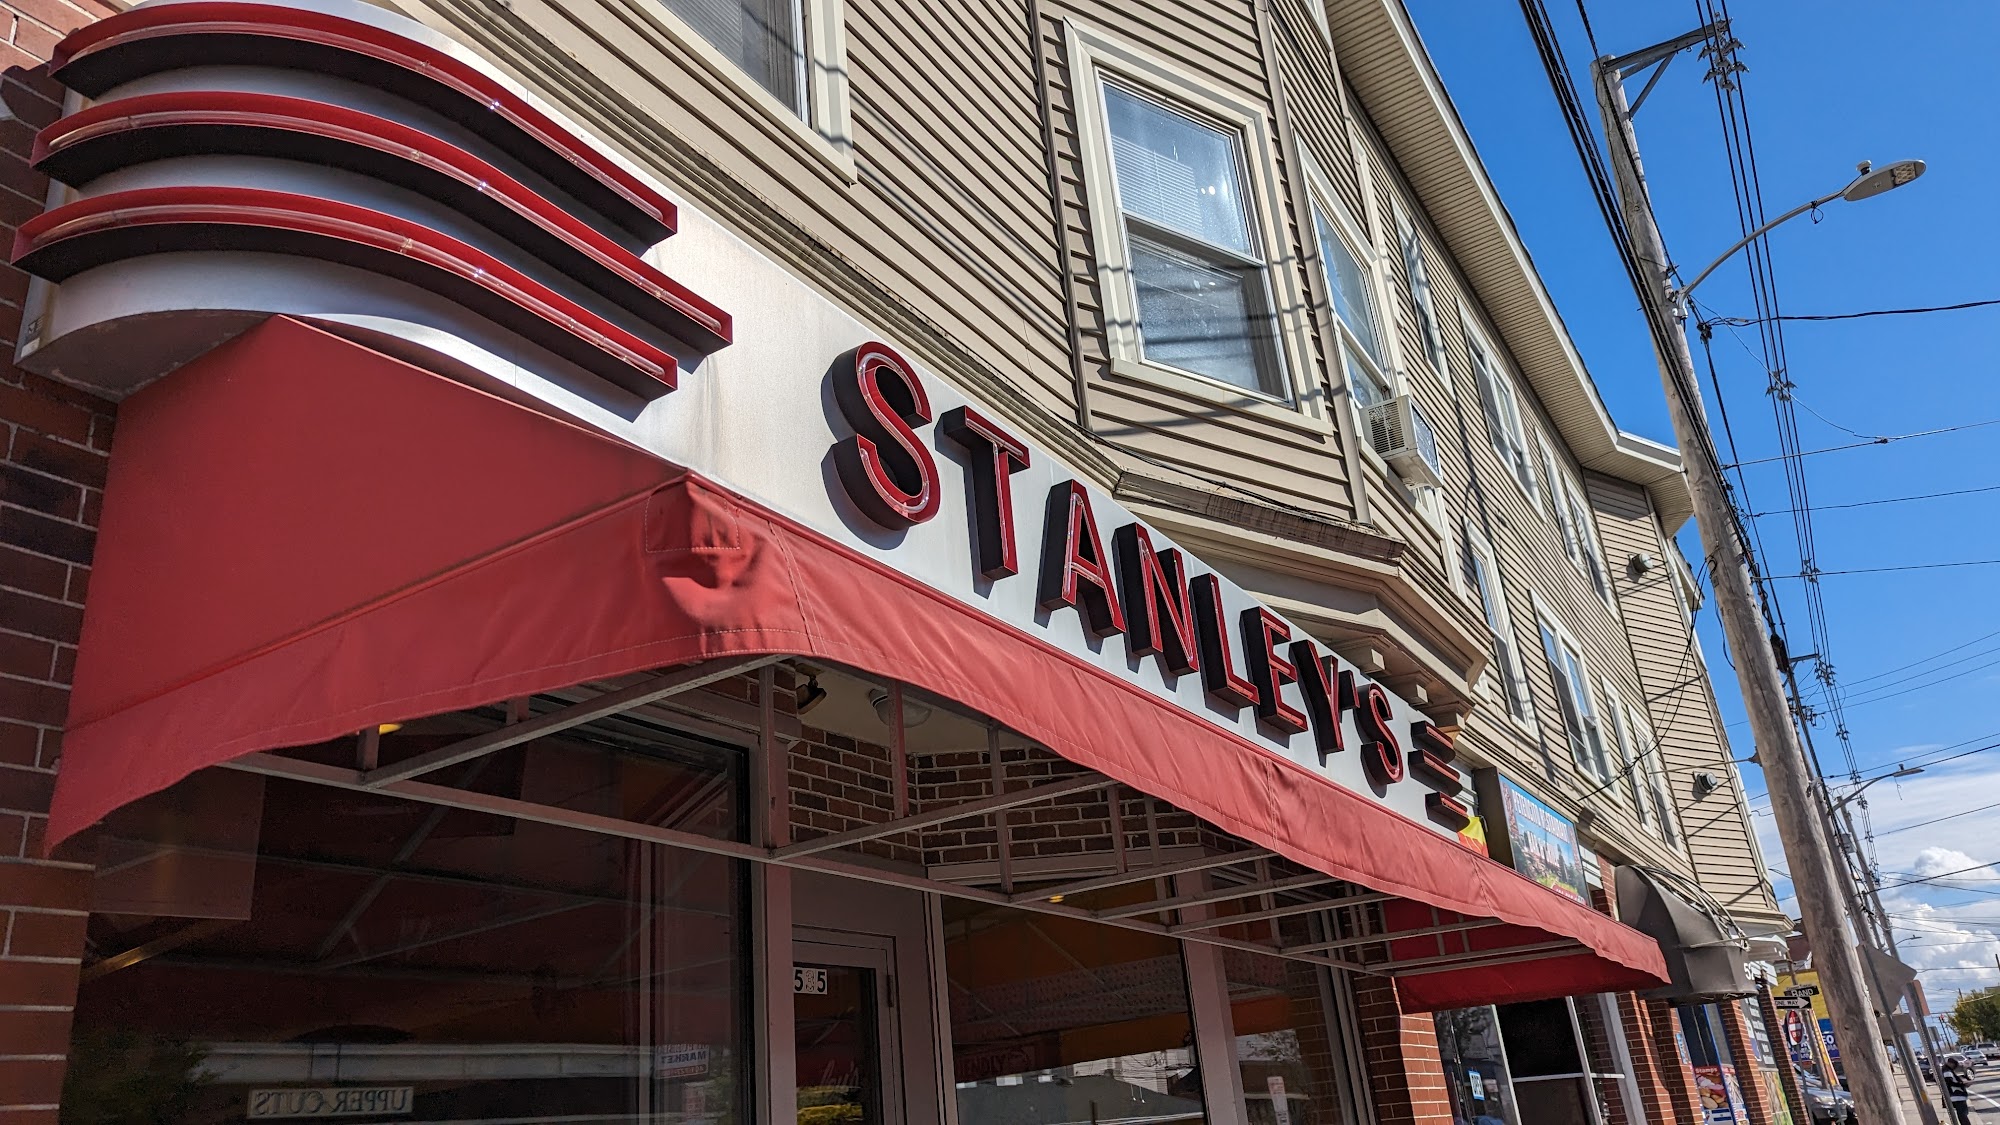 Stanley's Famous Hamburgers